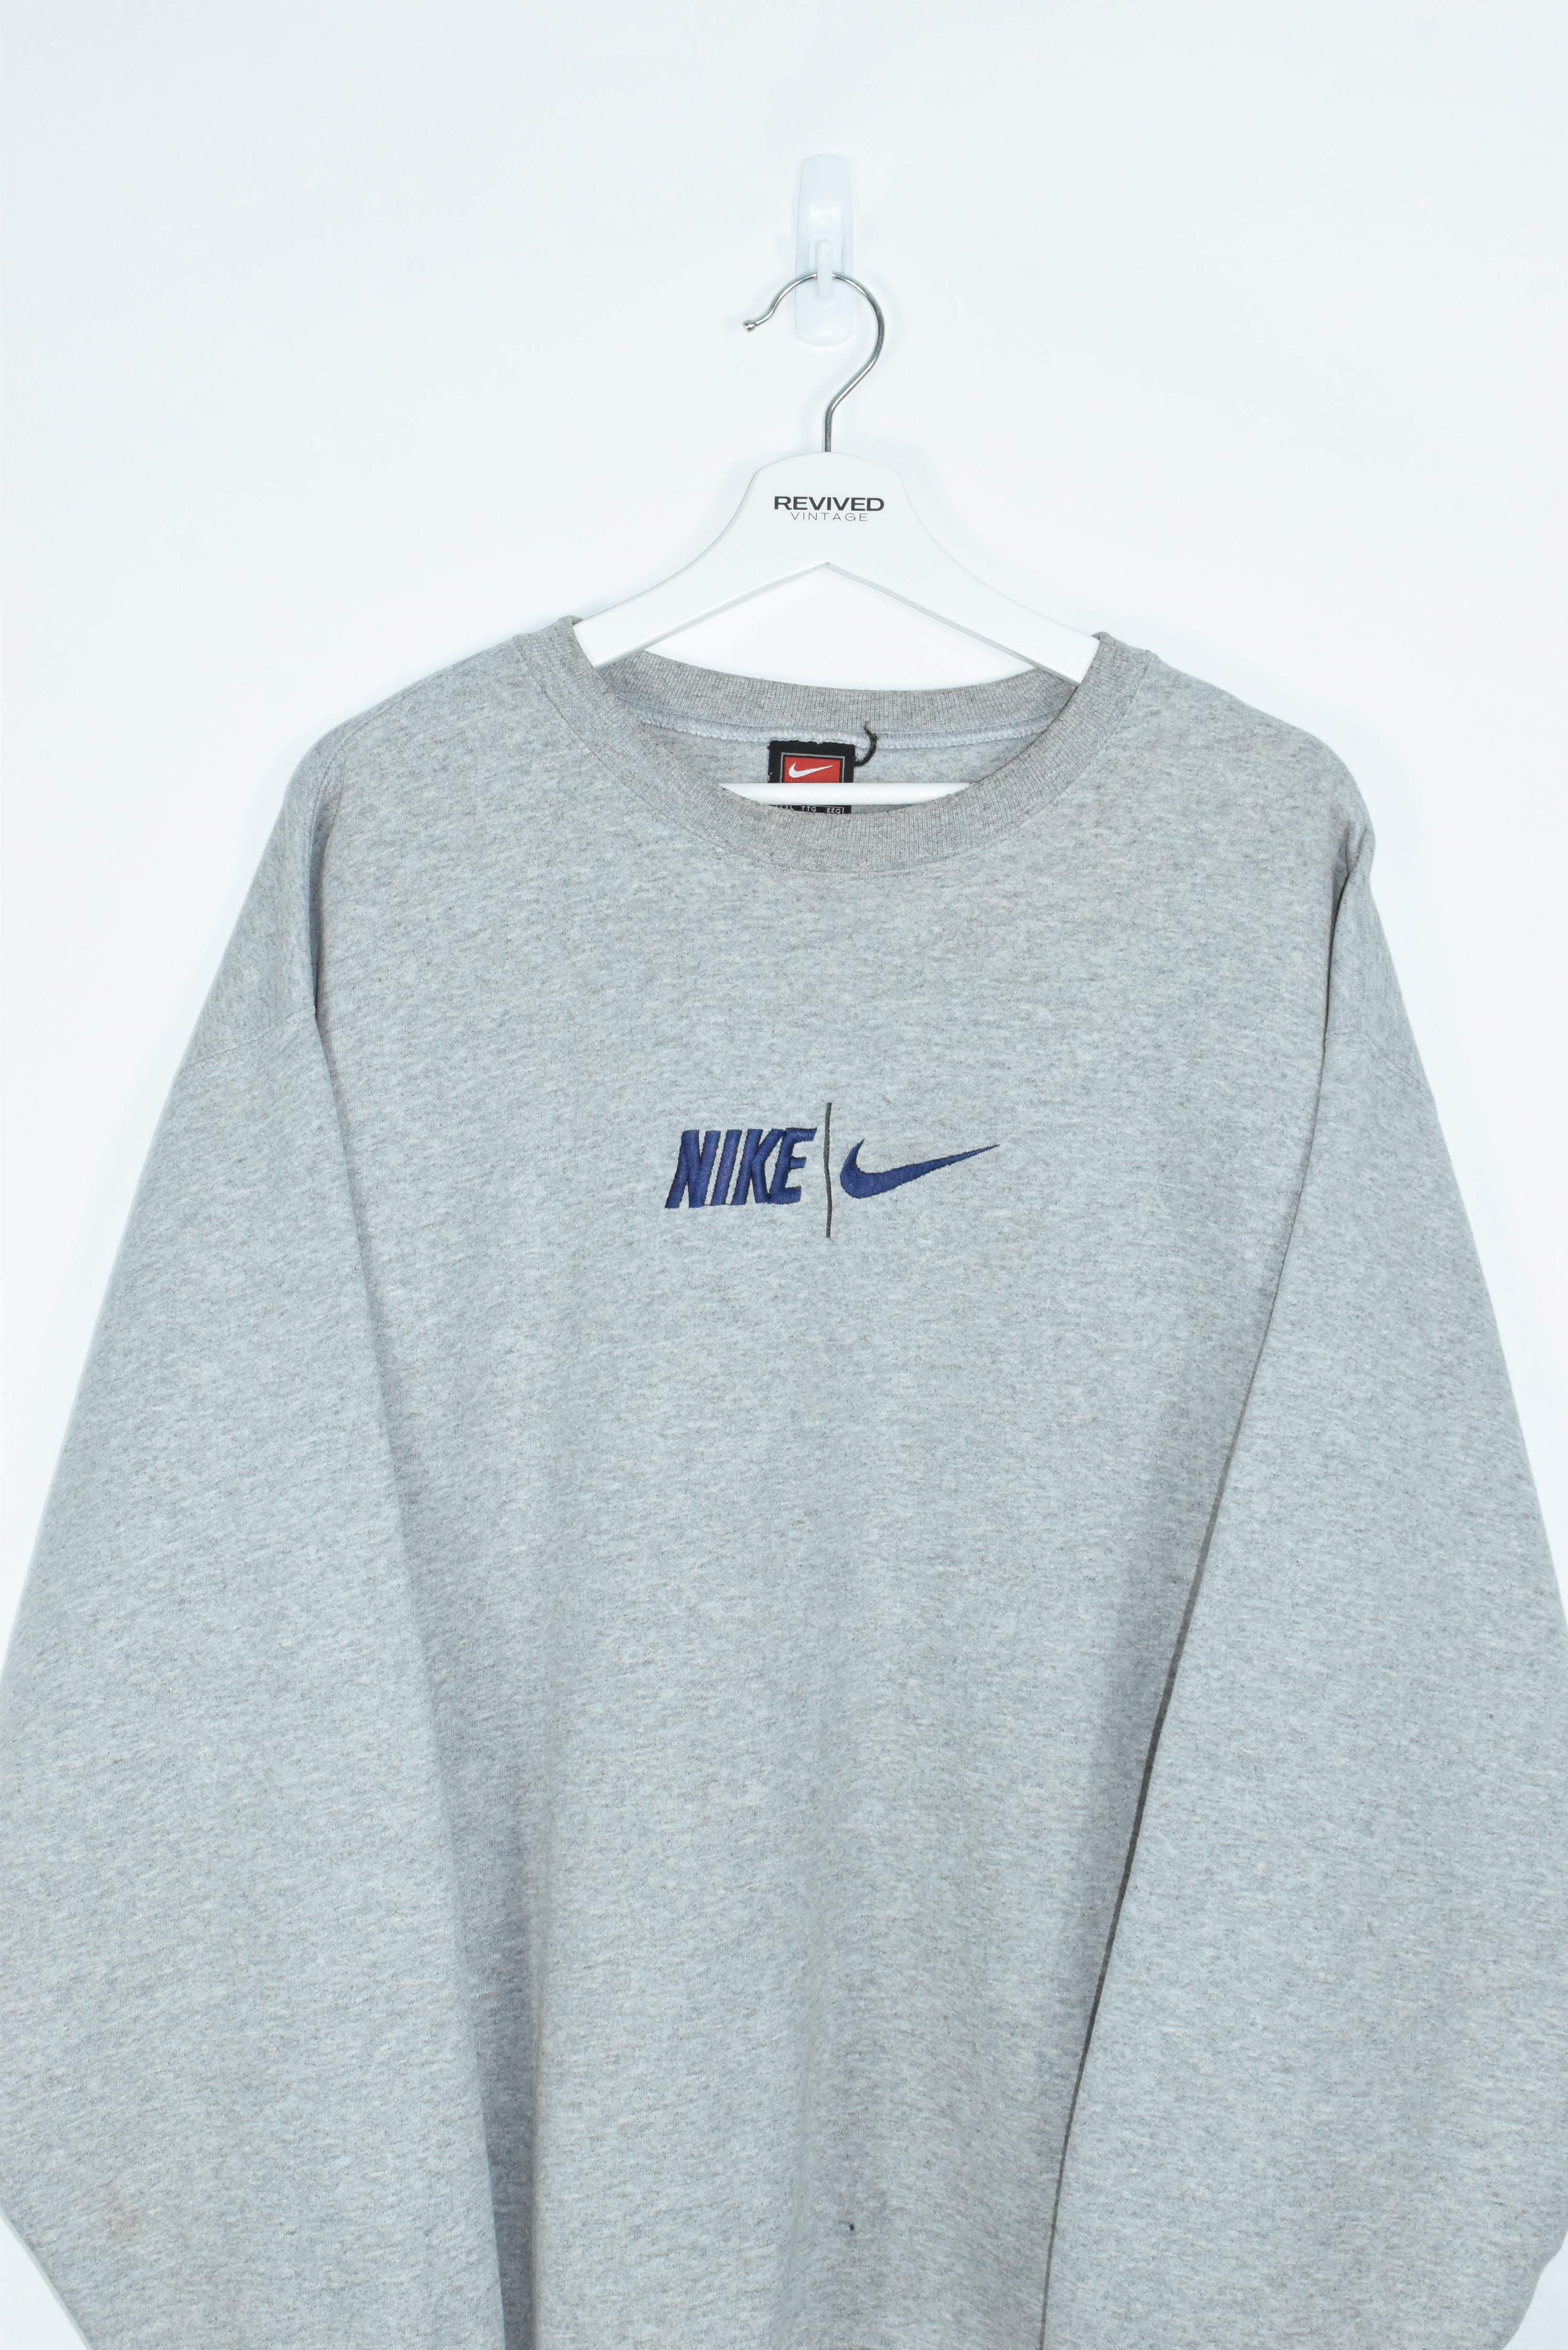 Vintage Nike Embroidery Sweatshirt XLARGE